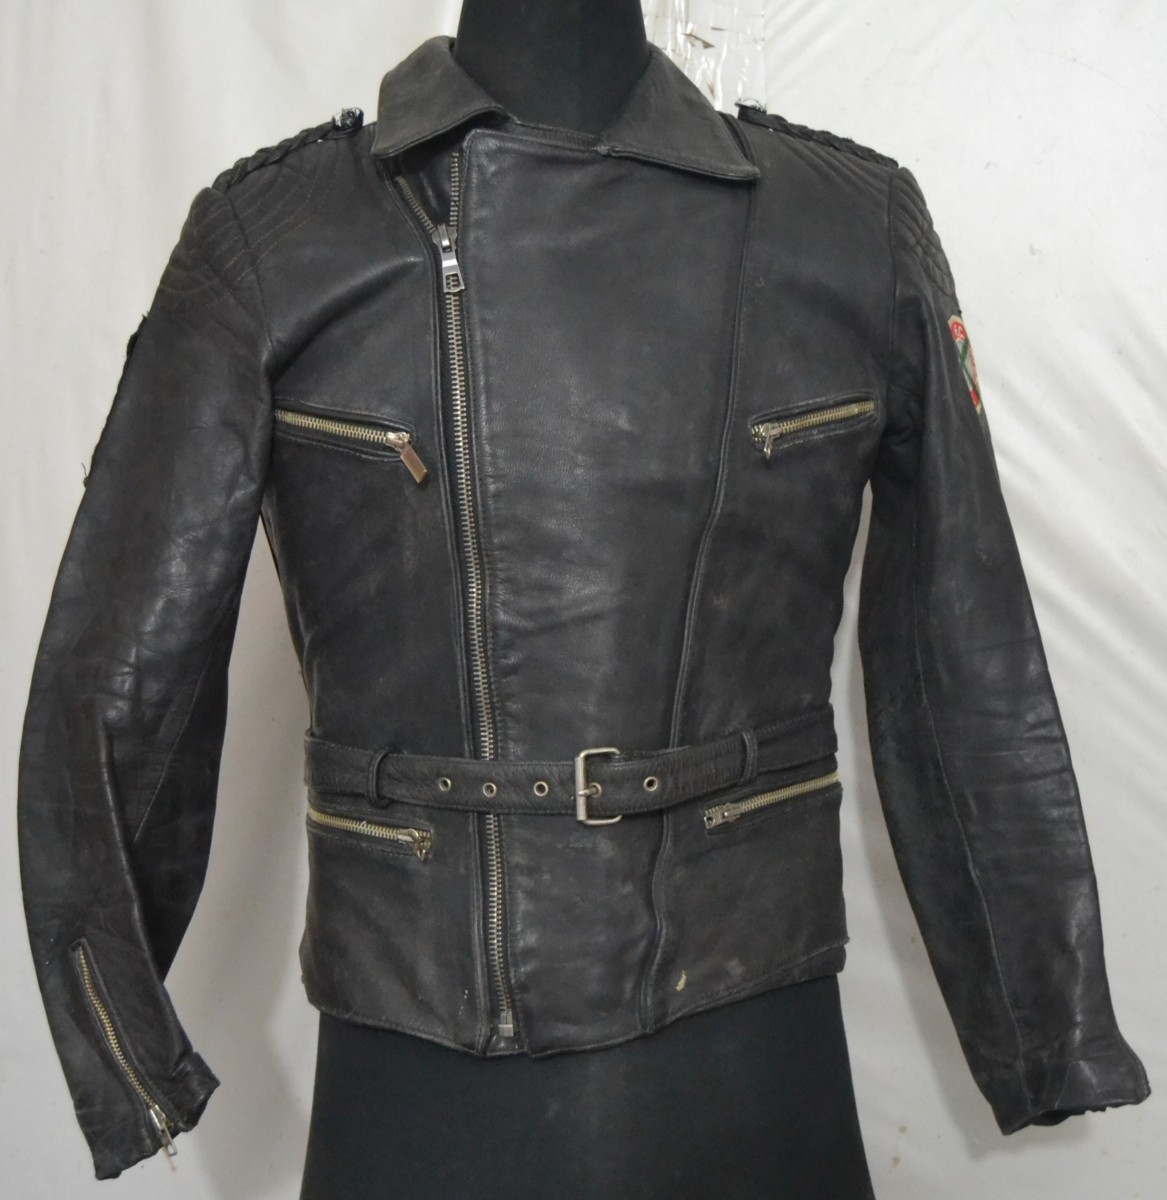 ECHTES LEDER Men’ Motorcycle Leather Jacket With Patches (G-10,1.8 kg) – UK Wholesale Vintage ...